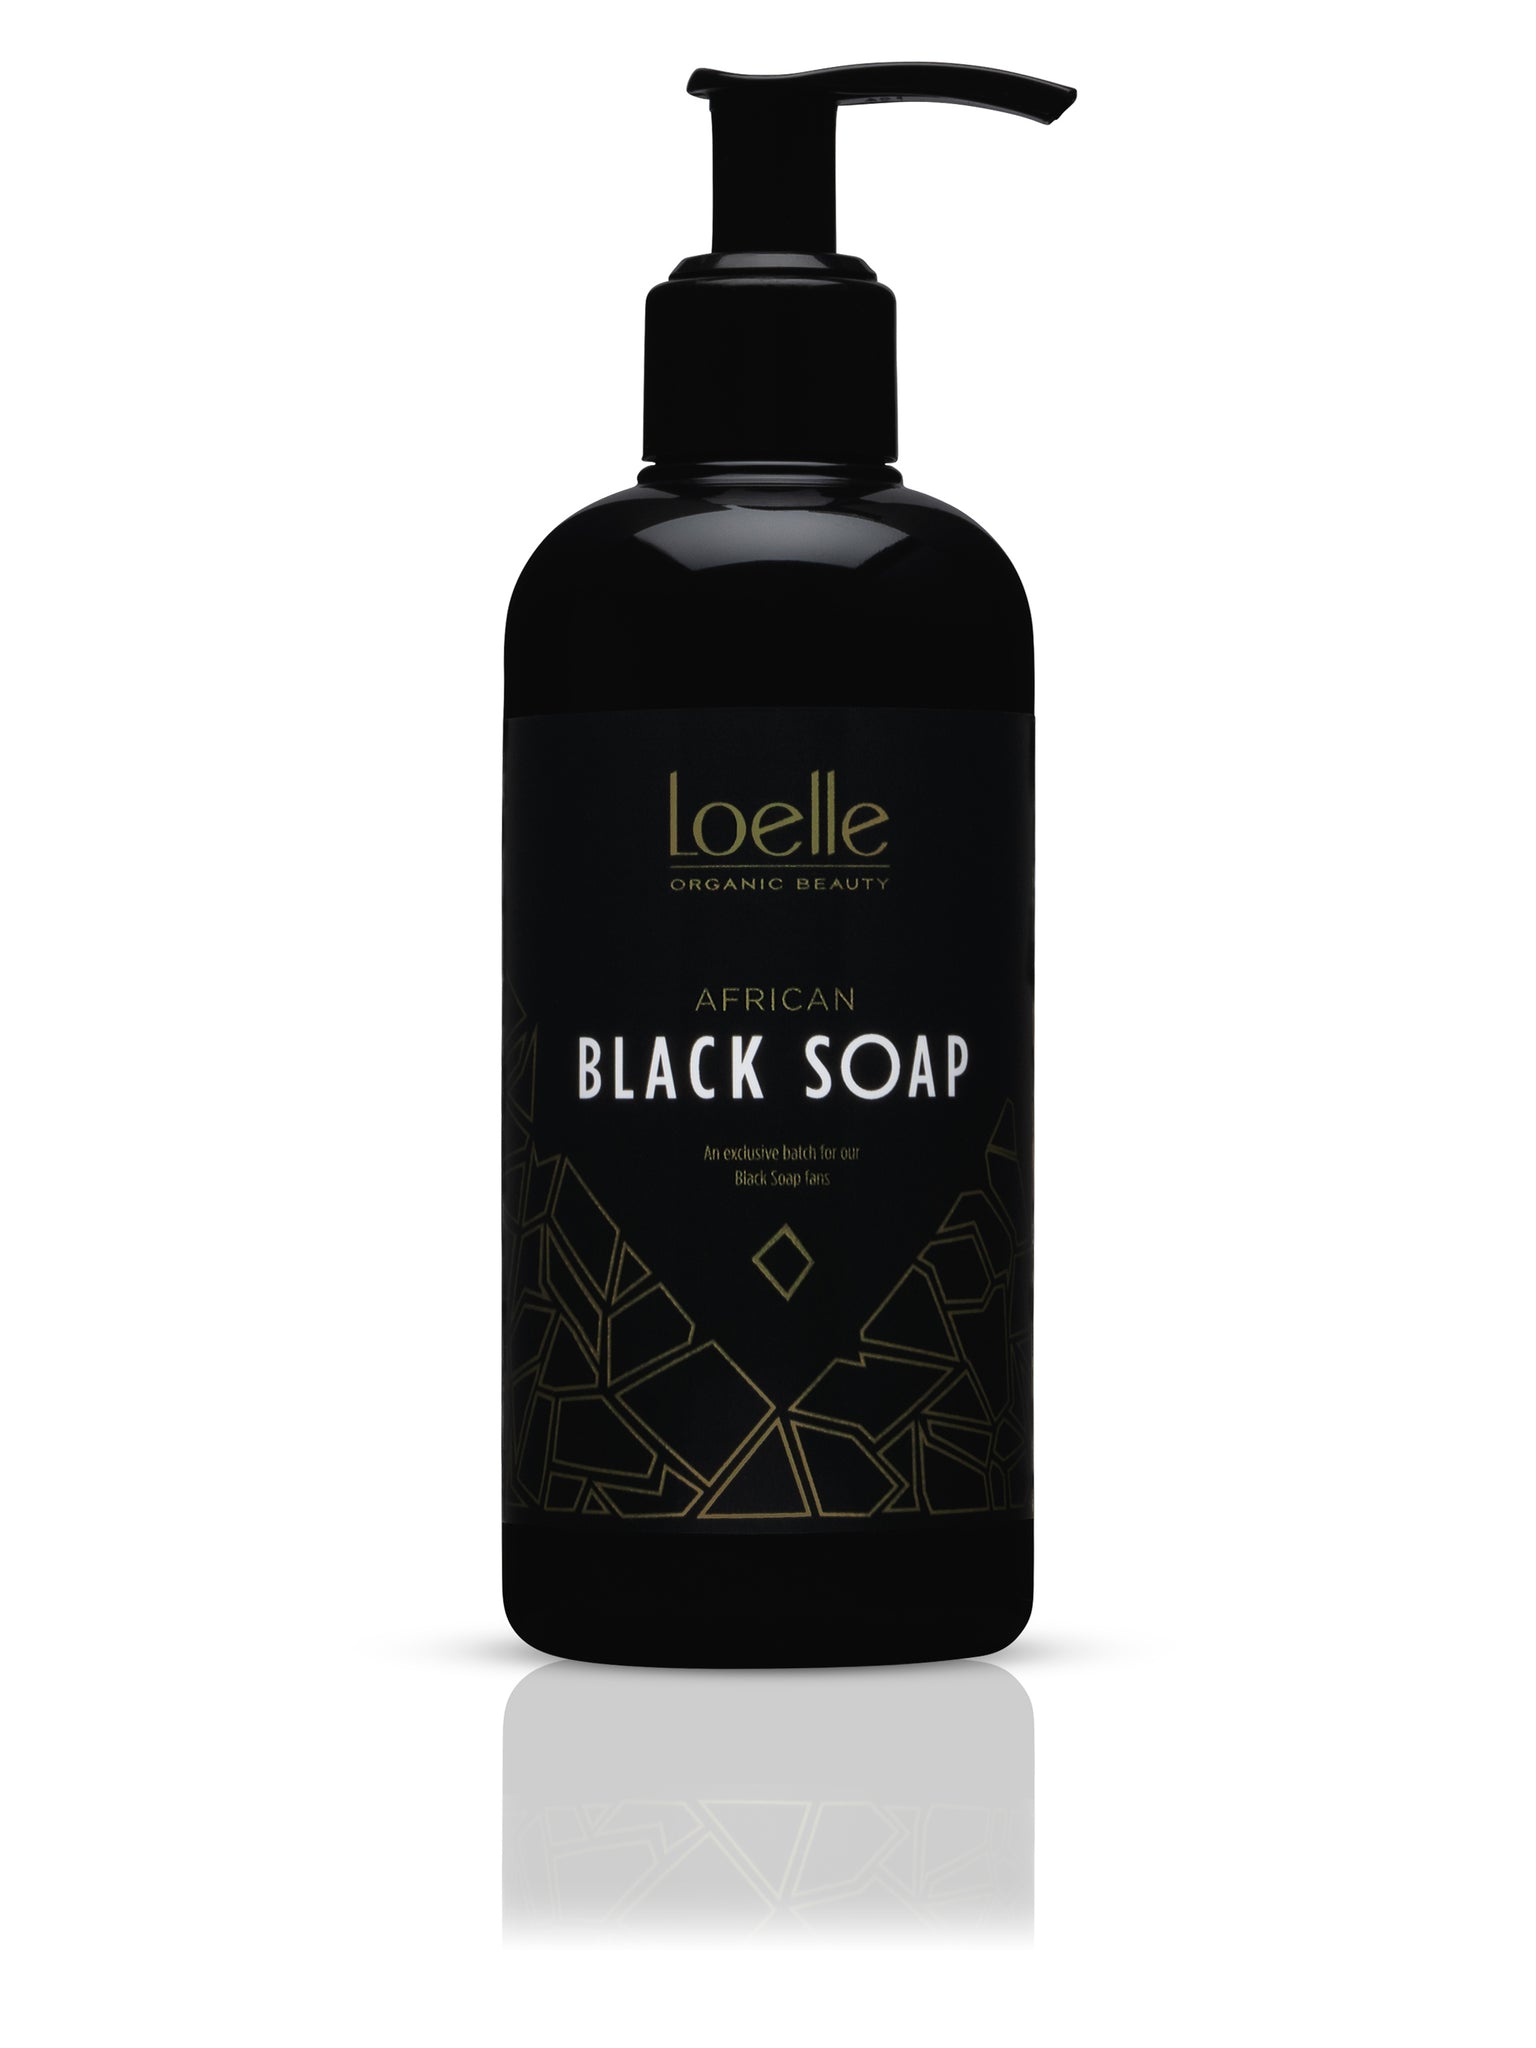 Loelle African Black Soap 250ml - Give Us Beauty